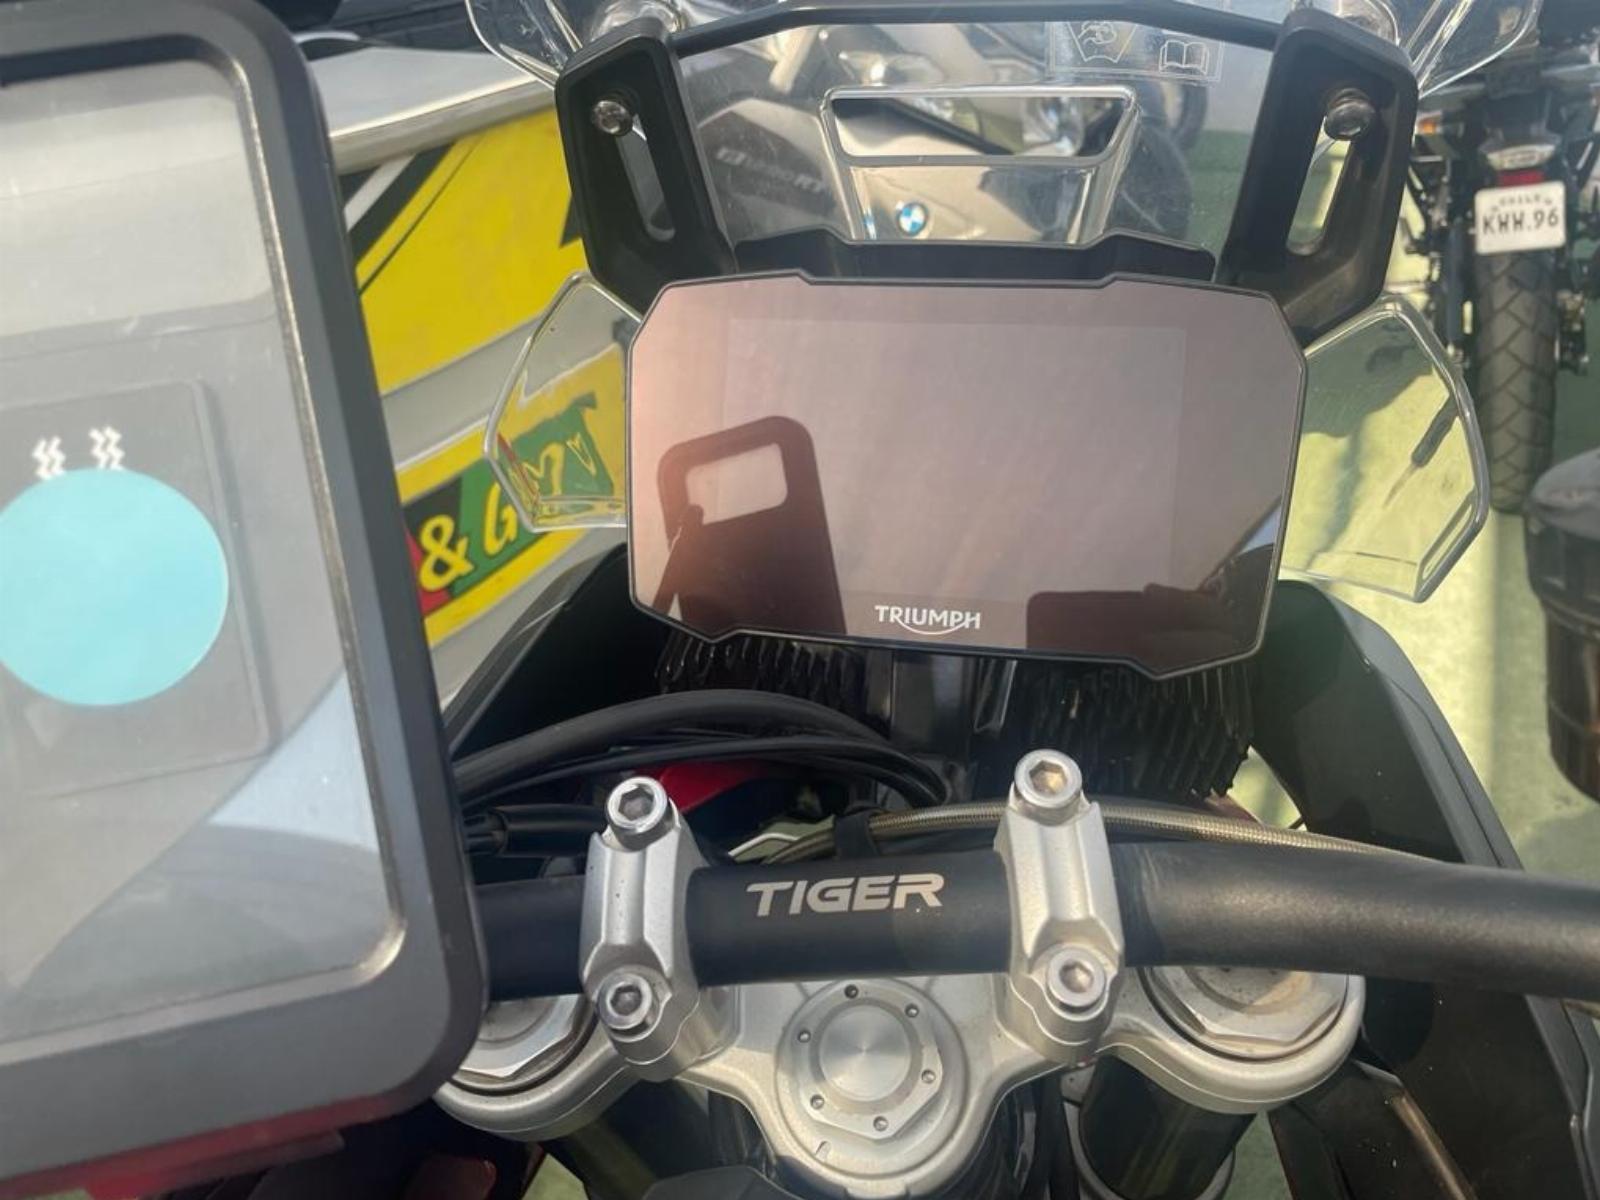 TRIUMPH TIGER TIGER 900 GT 2021 UNICO DUEÑO - FULL MOTOR